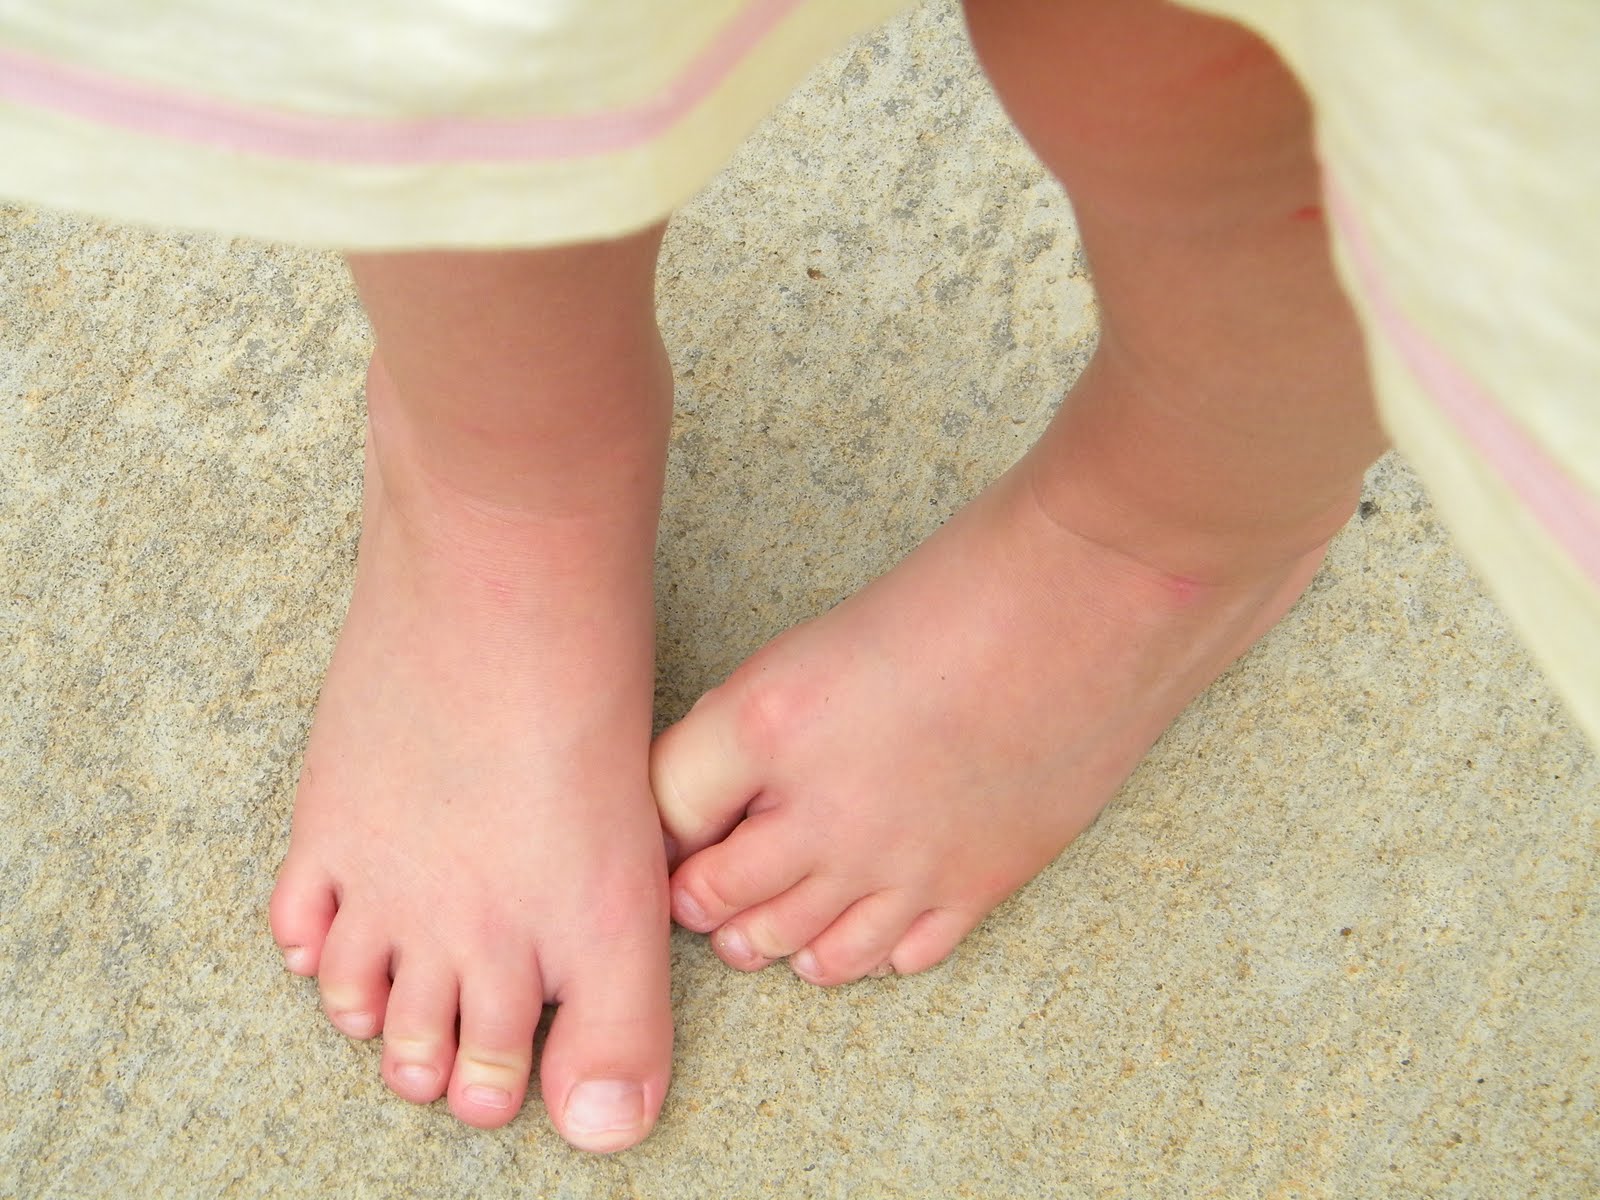 Foot девочек. Маленькие feet. Детский тайфлас Феет. Детский foot feet. Kids Челленджер feet.